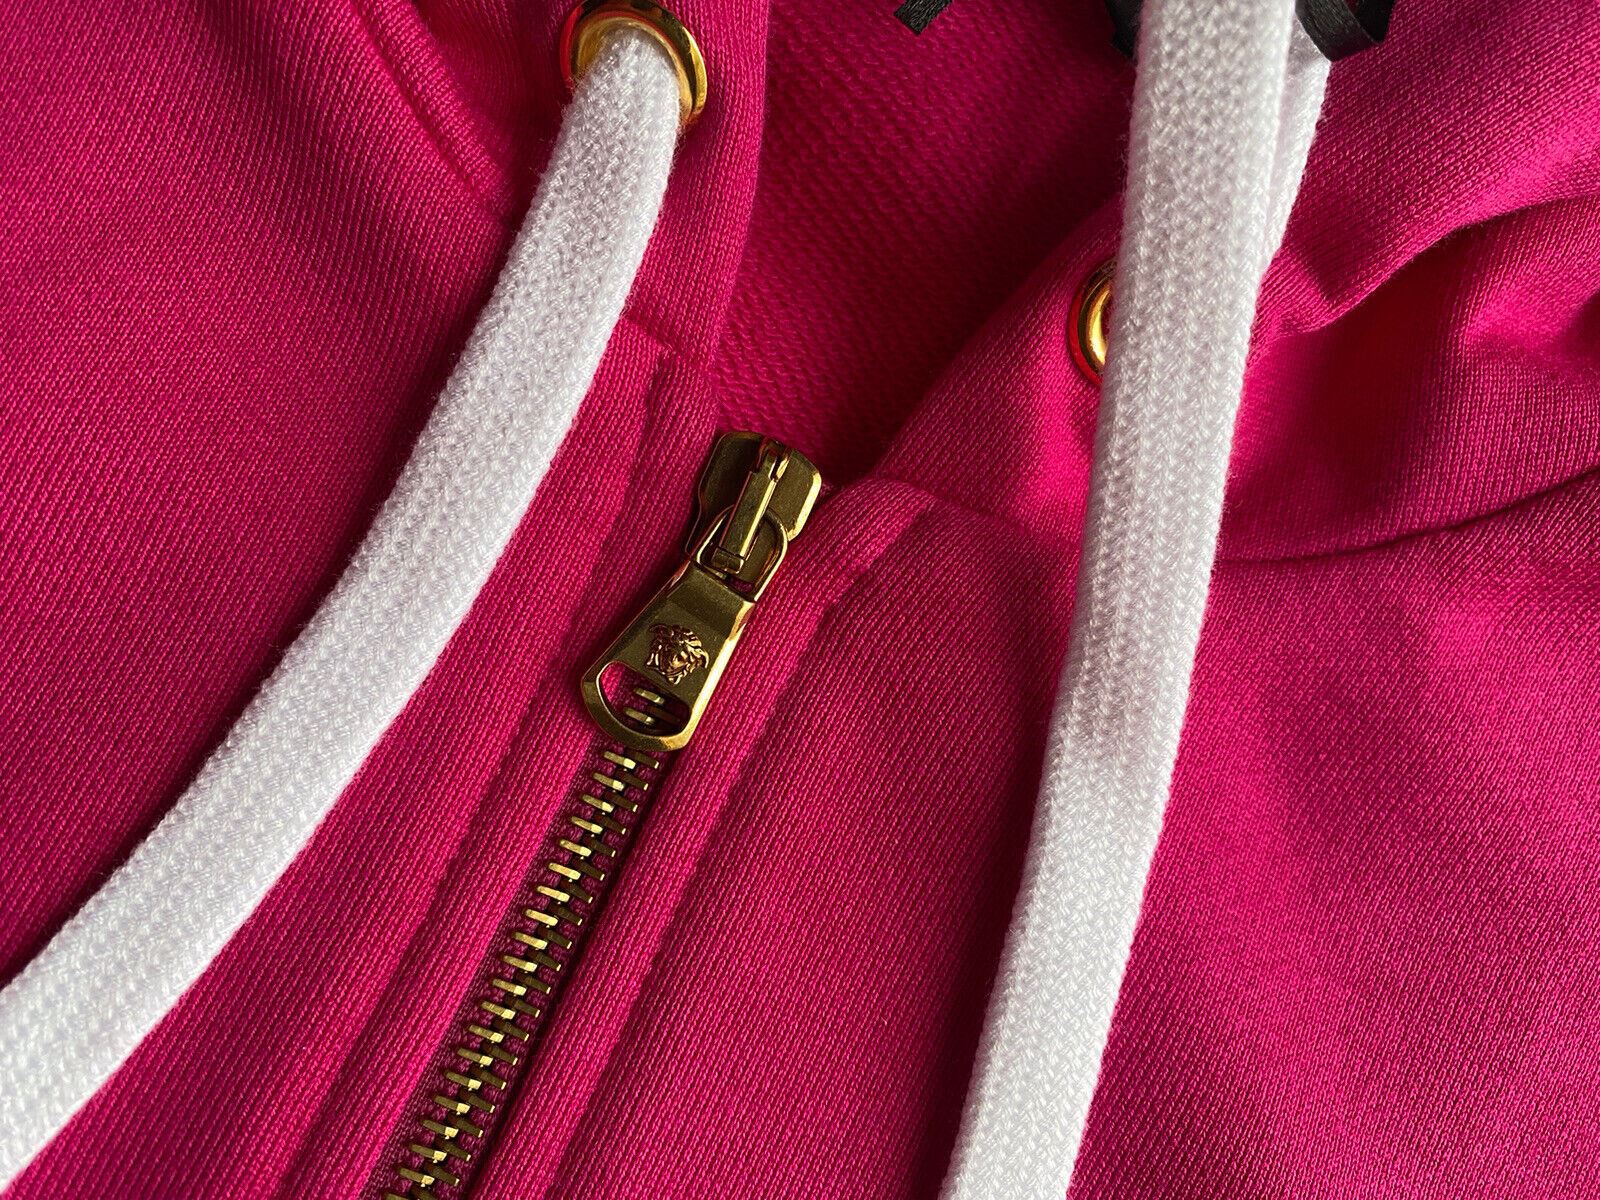 NWT $950 Versace Women's Medusa Hooded Pink Jacket 10 US (44 Euro) A231242 IT